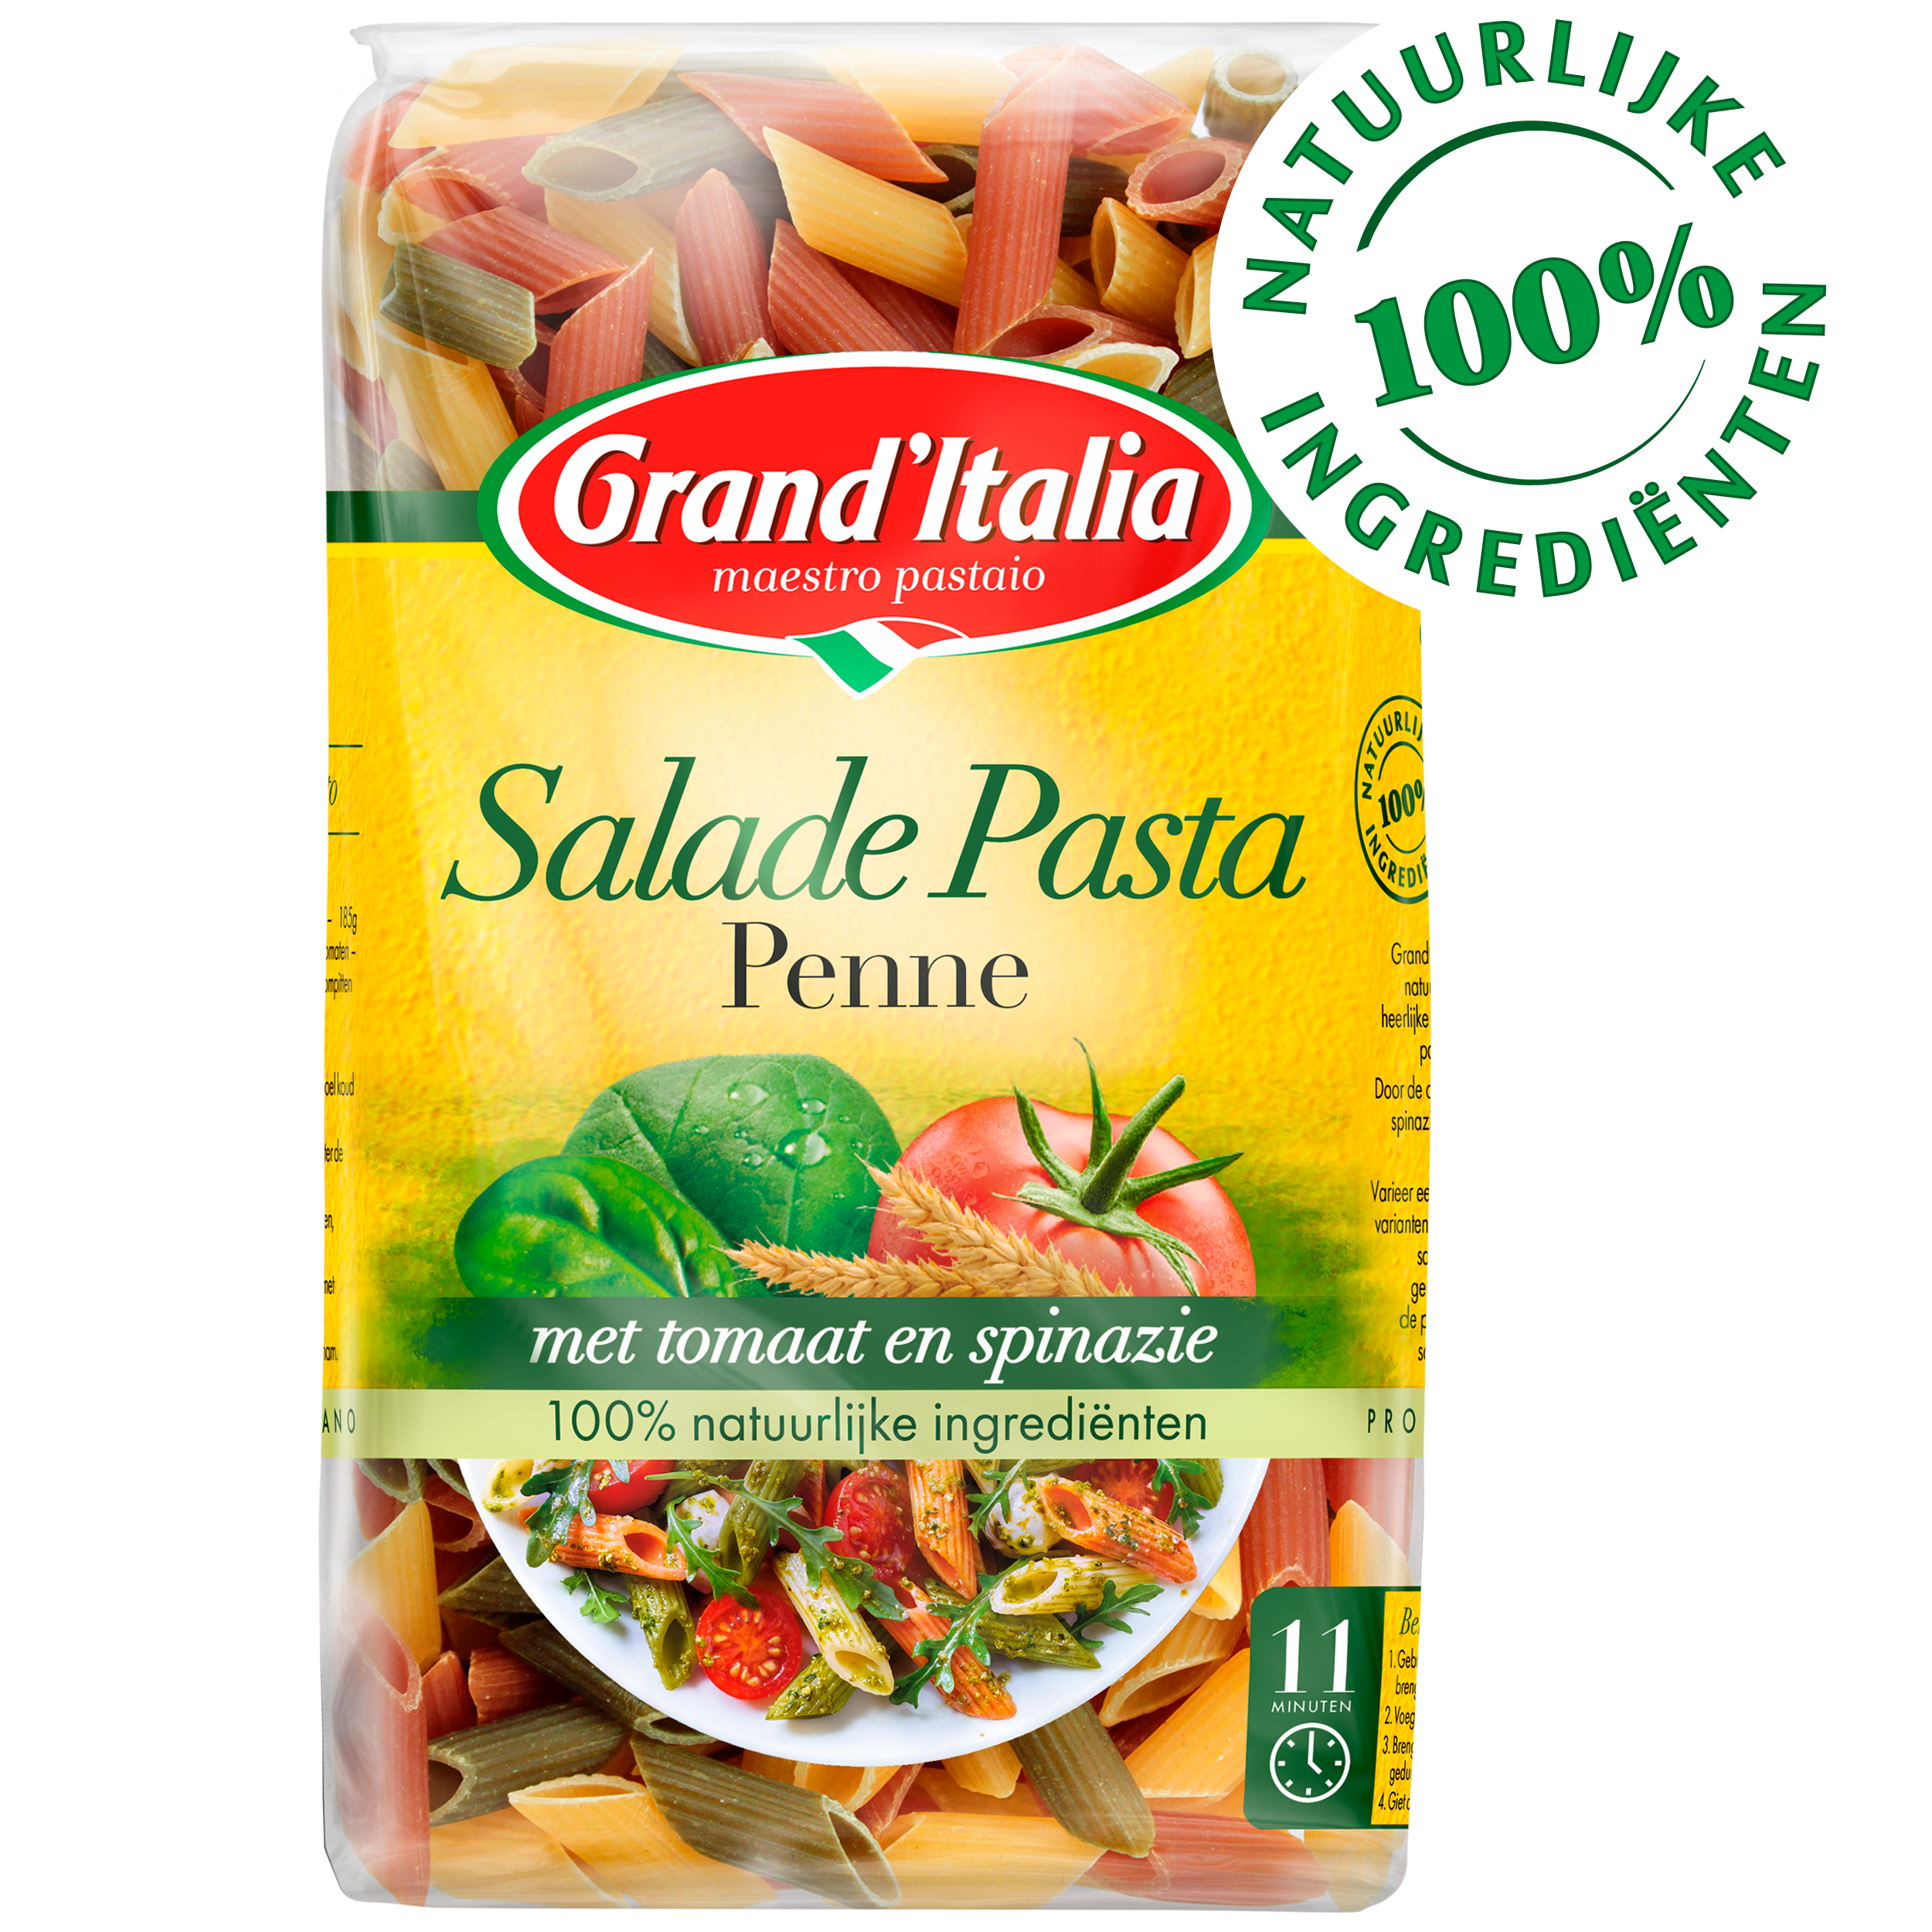 Pasta Salade Pasta Penne 500g claim Grand'Italia